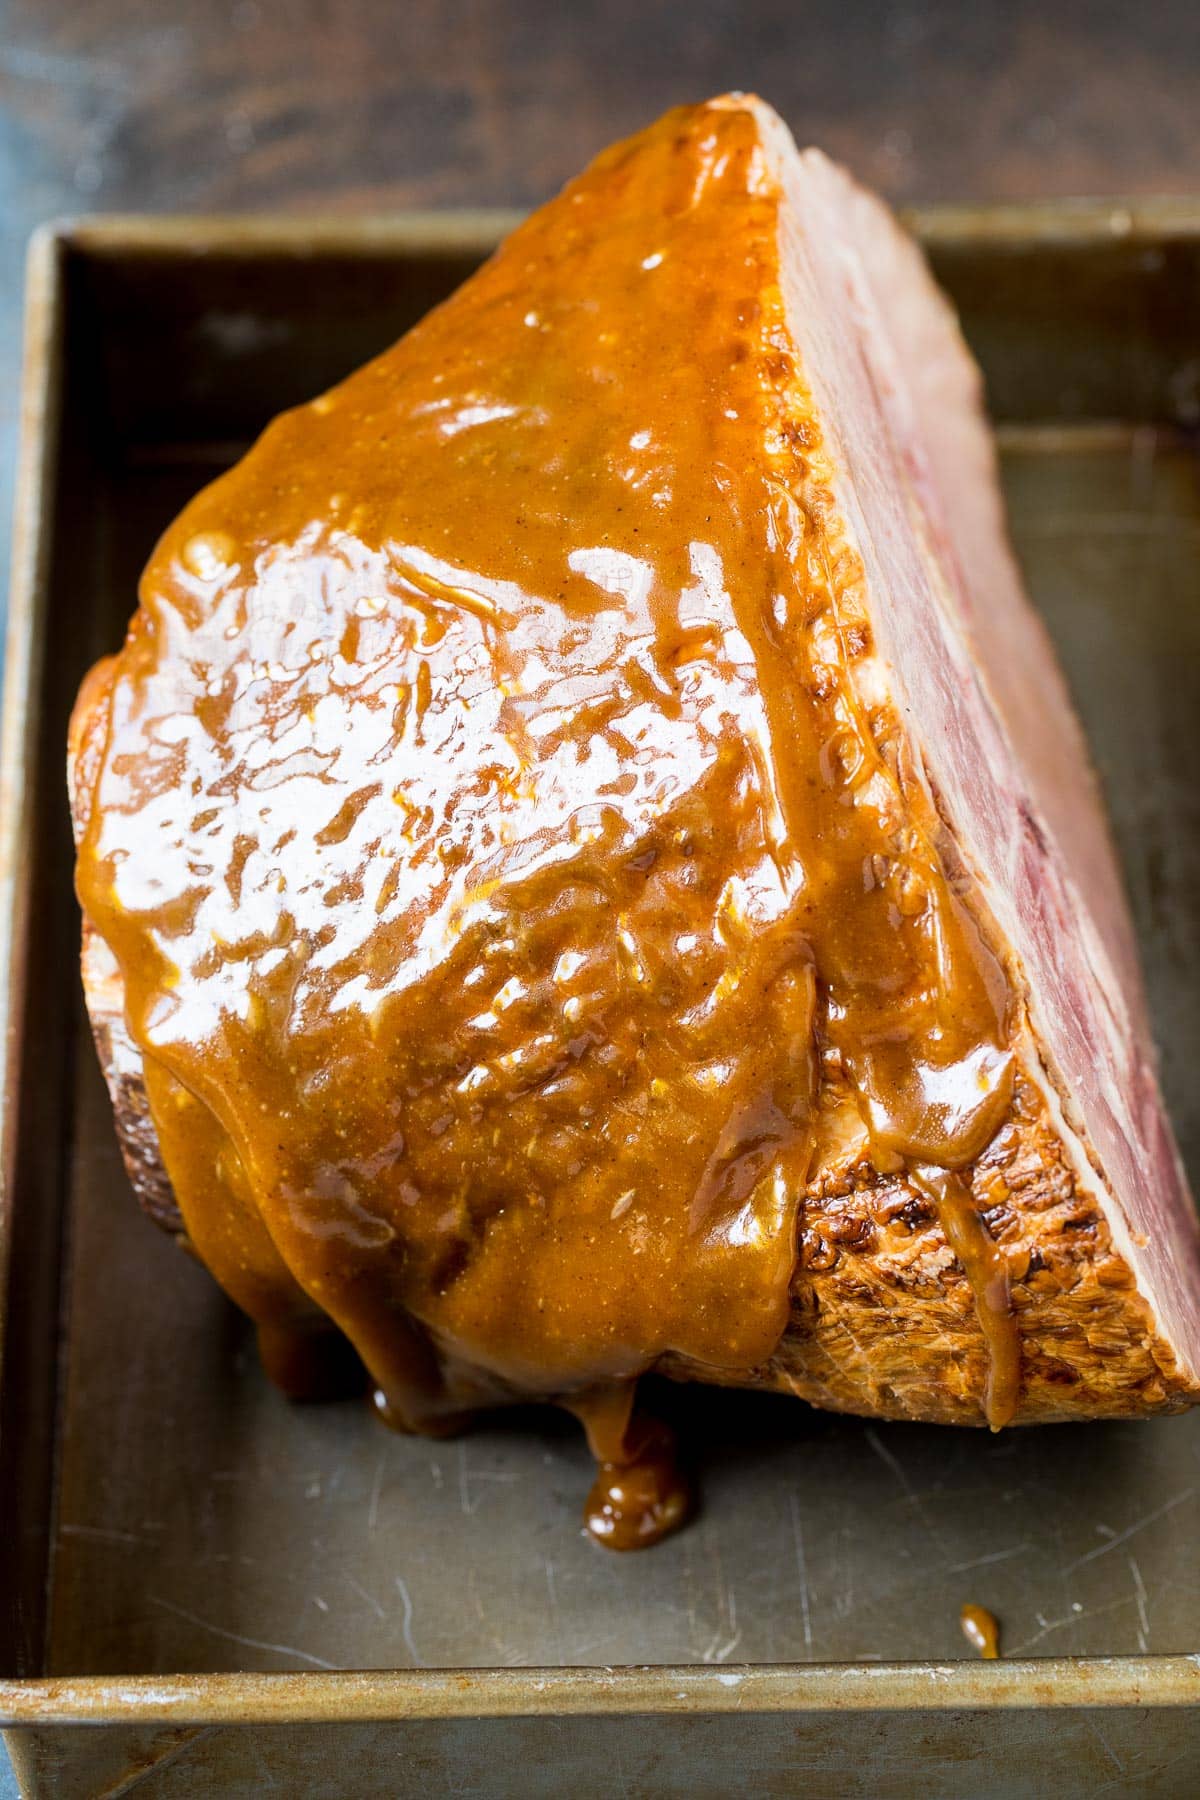 A ham coated in homemade glaze.